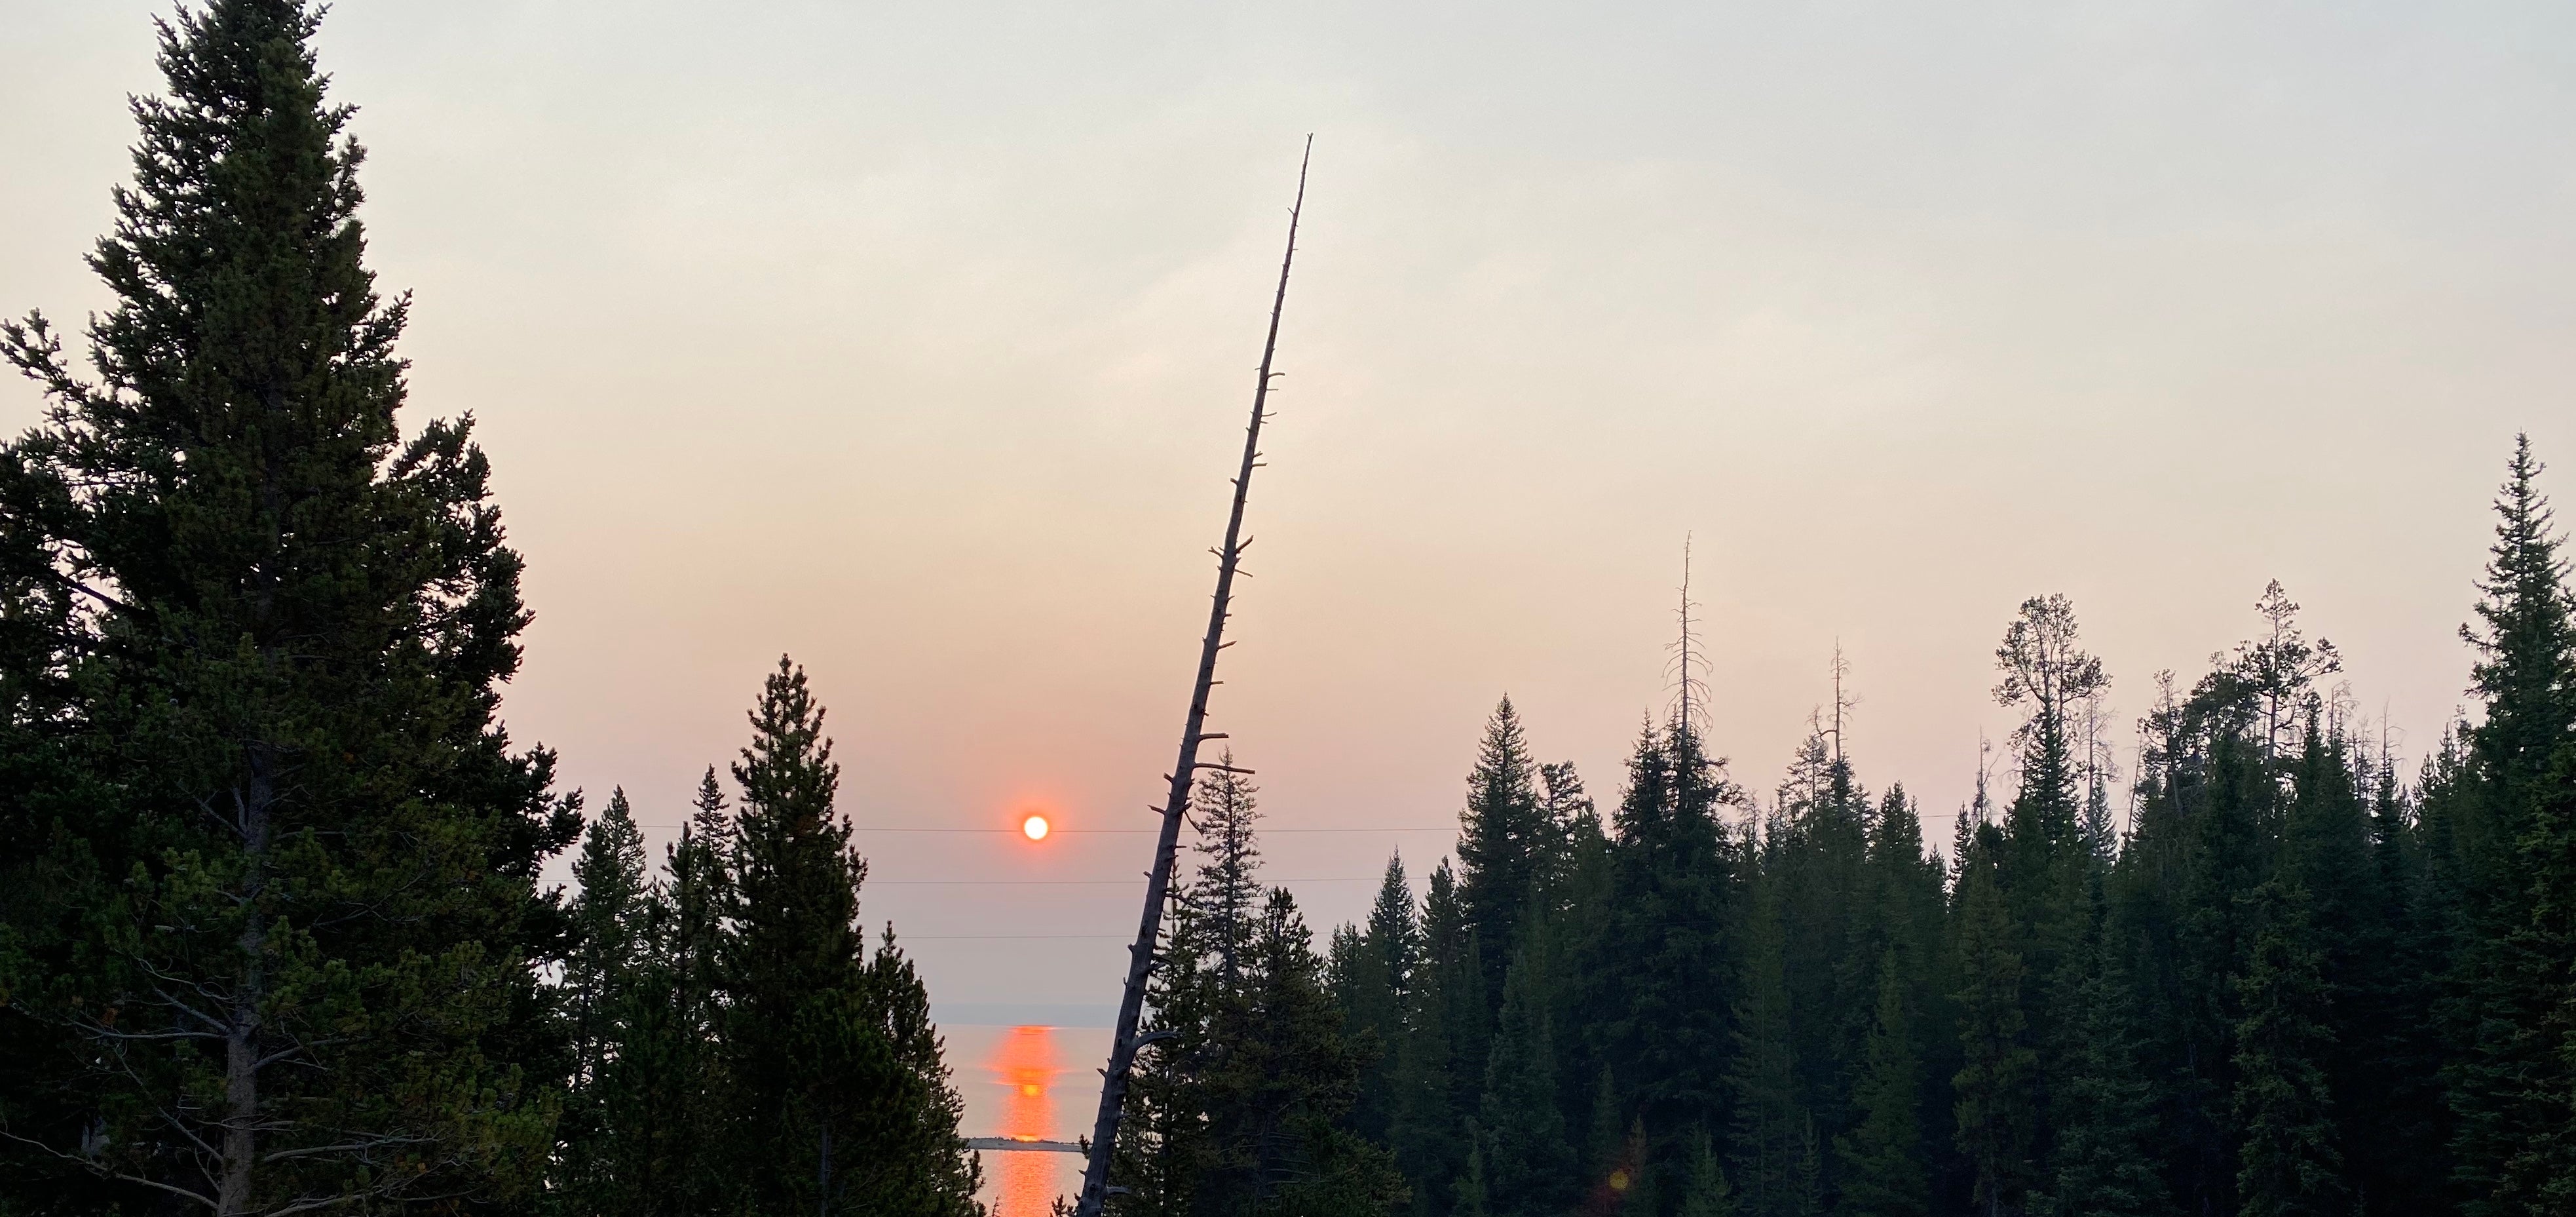 Hazy sunrise on Yellowstone lake from the bridge on campground road